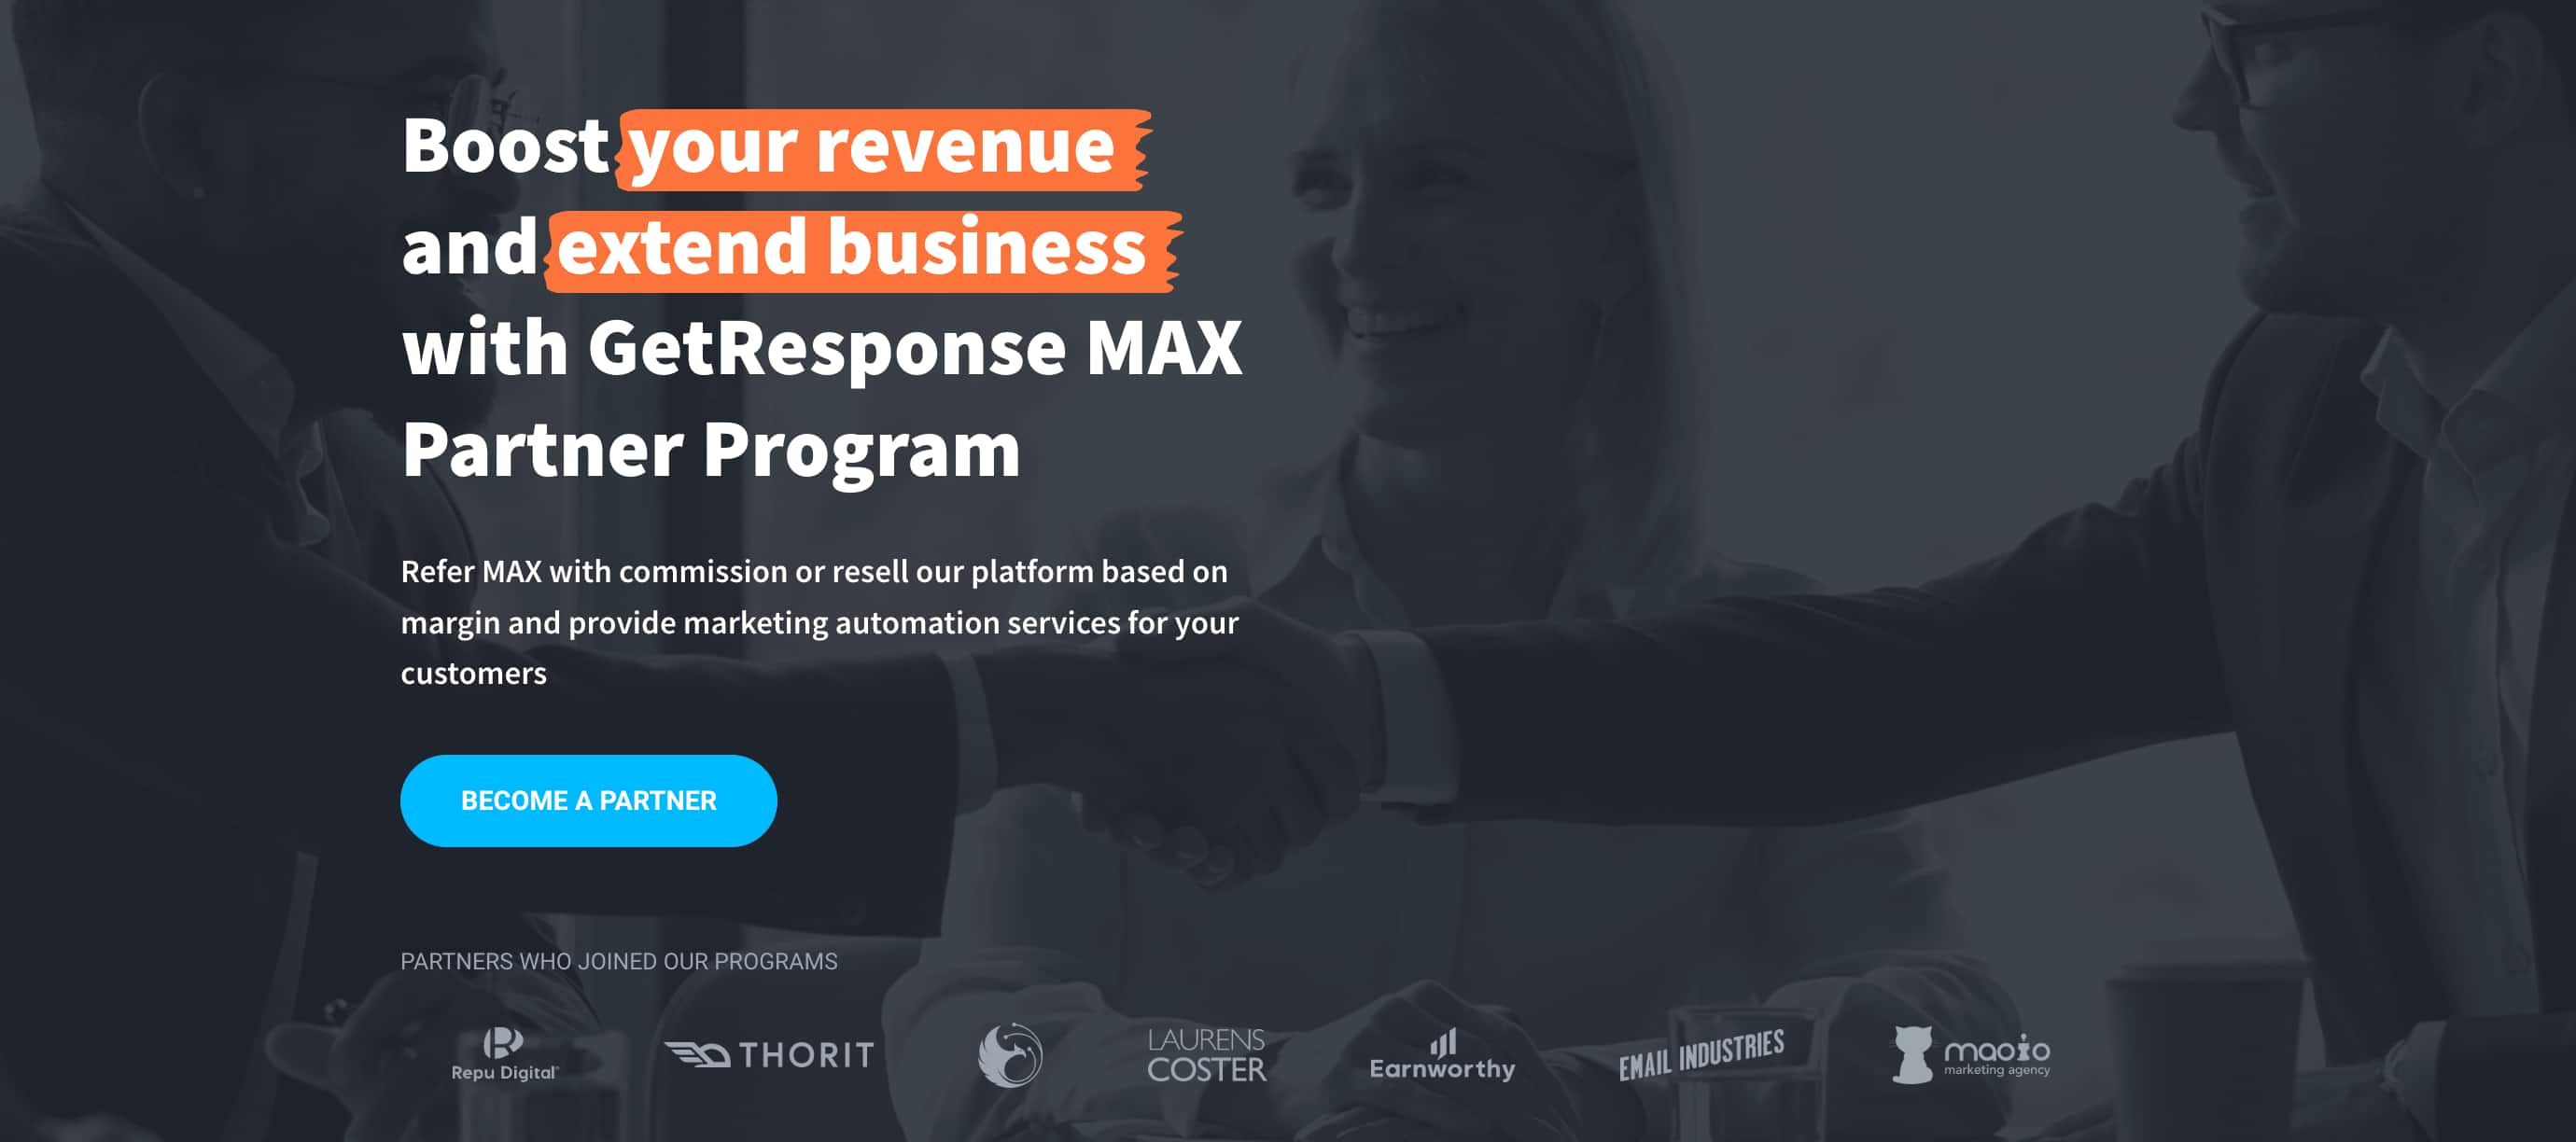 GetResponse MAX Partner Program